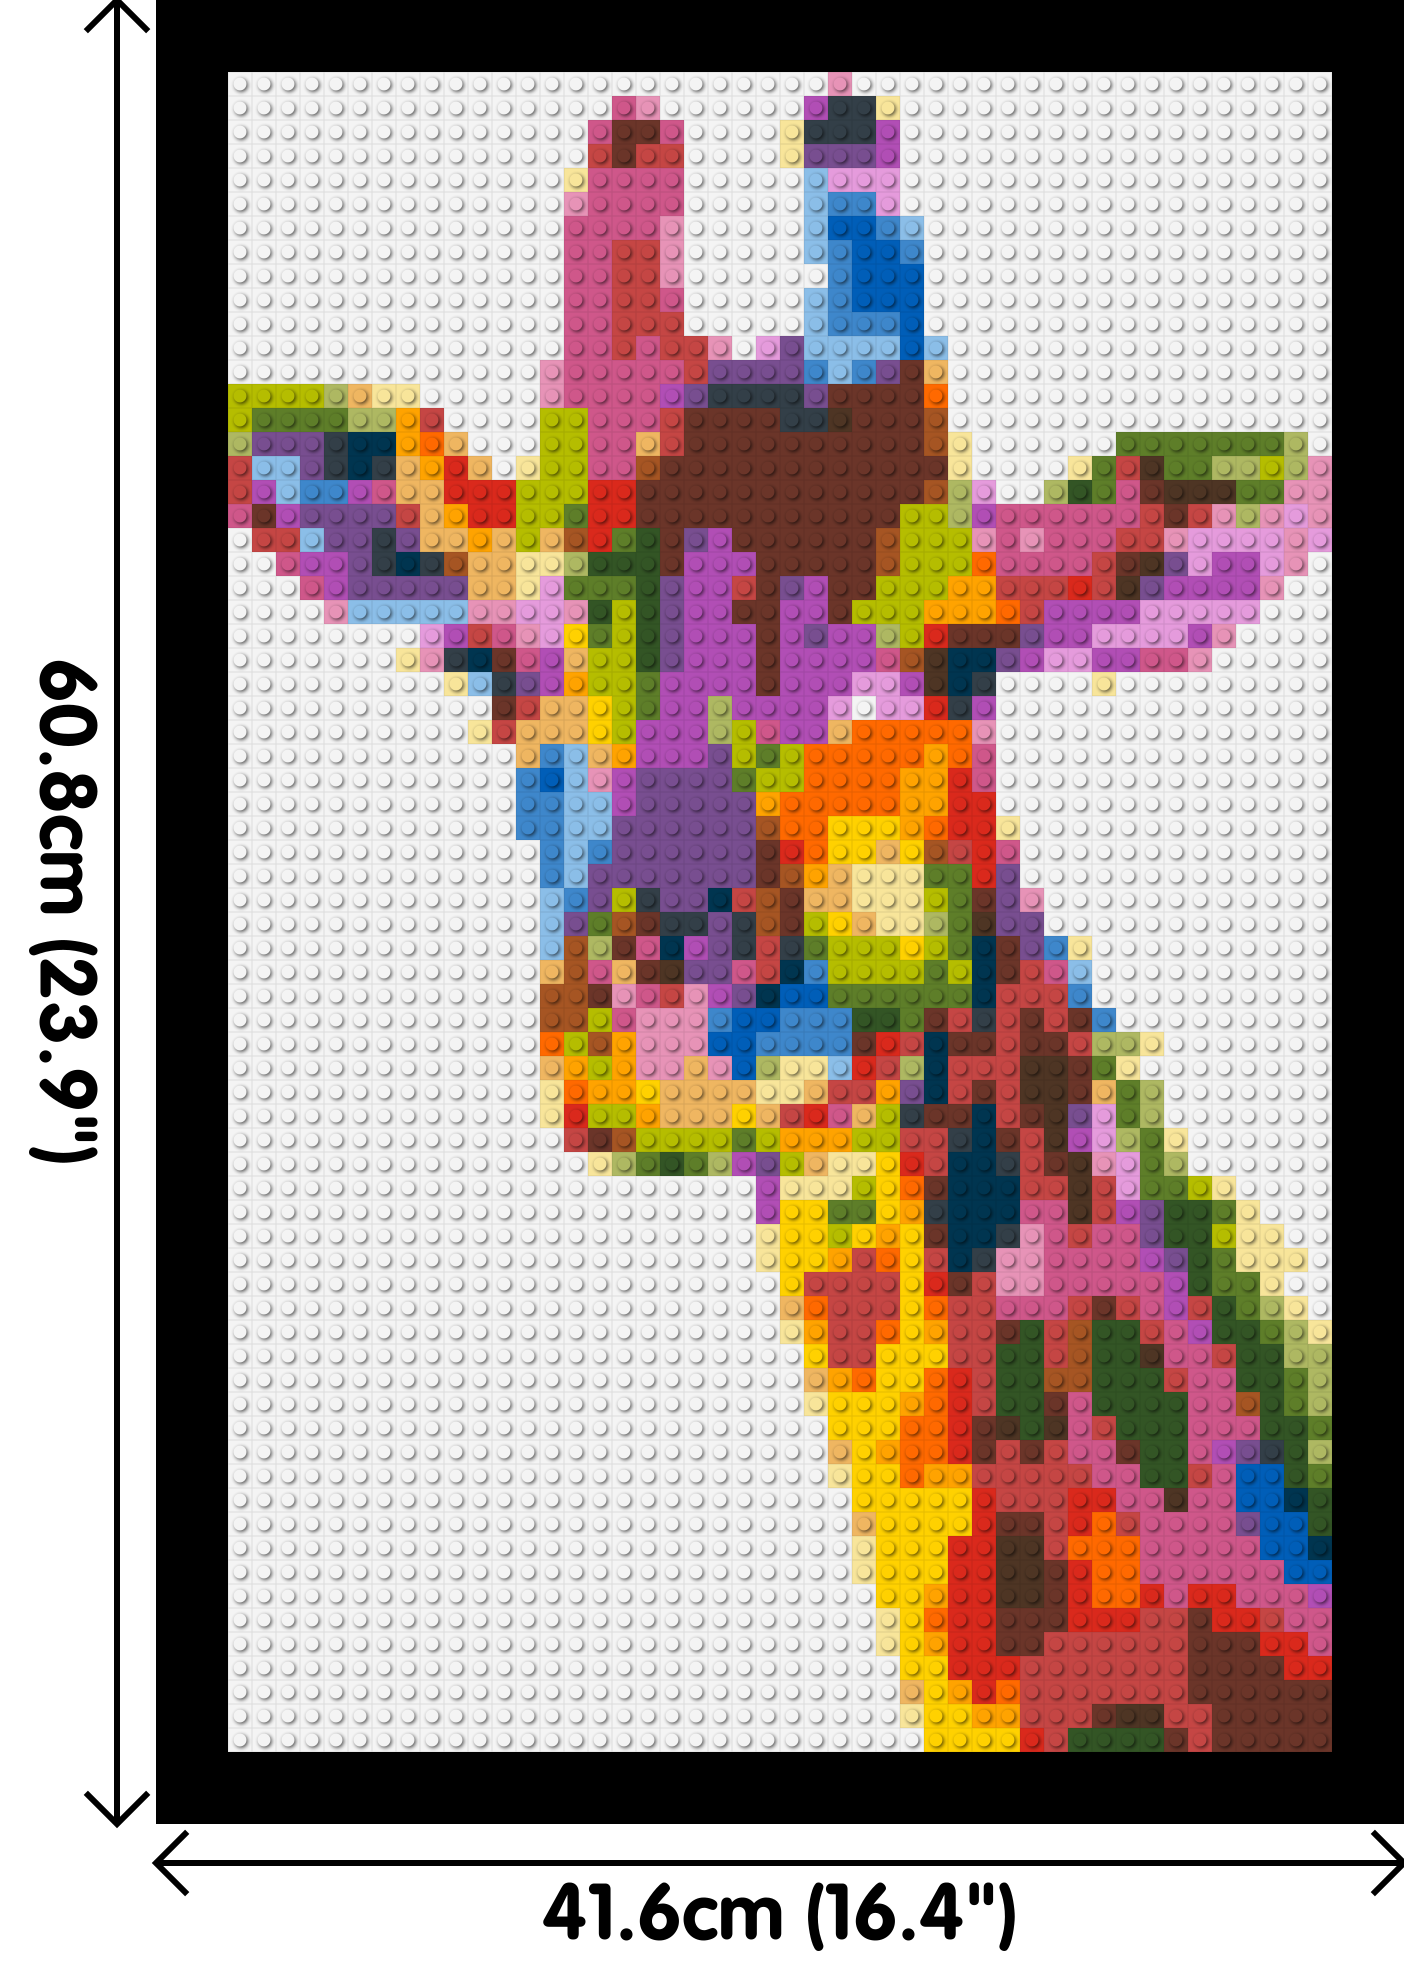 Giraffe Colourful Pop Art - Brick Art Mosaic Kit